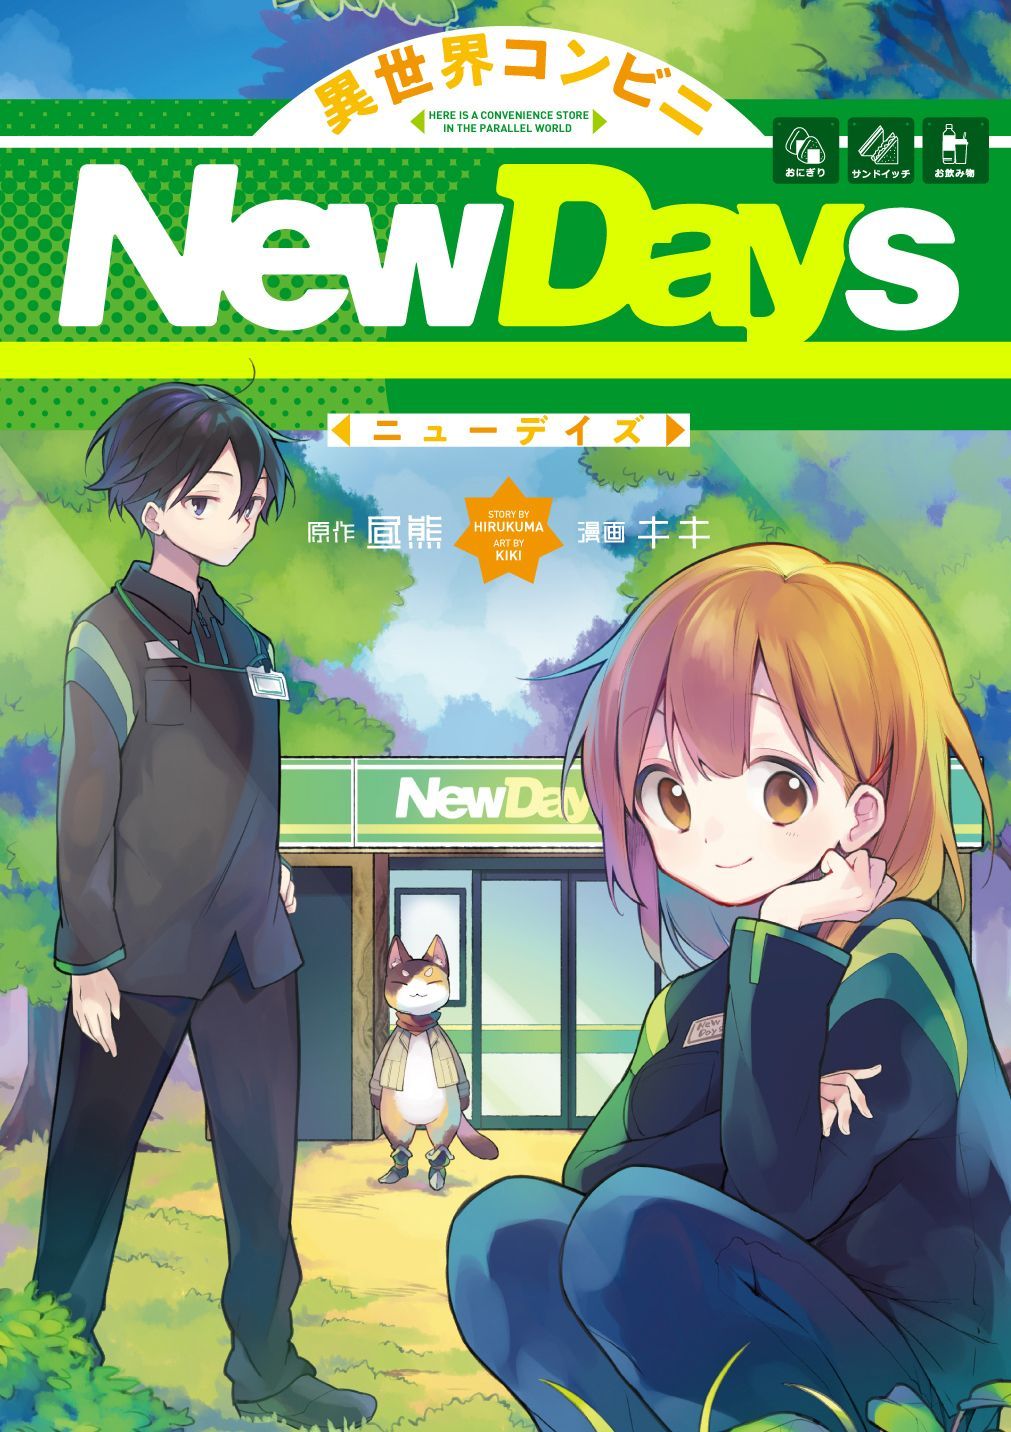 Newdays マンガup Newdays大型ビジョンで放映されたコンテンツ 異世界コンビニnewdays が10月22日よりコミックスで発売 Newscast